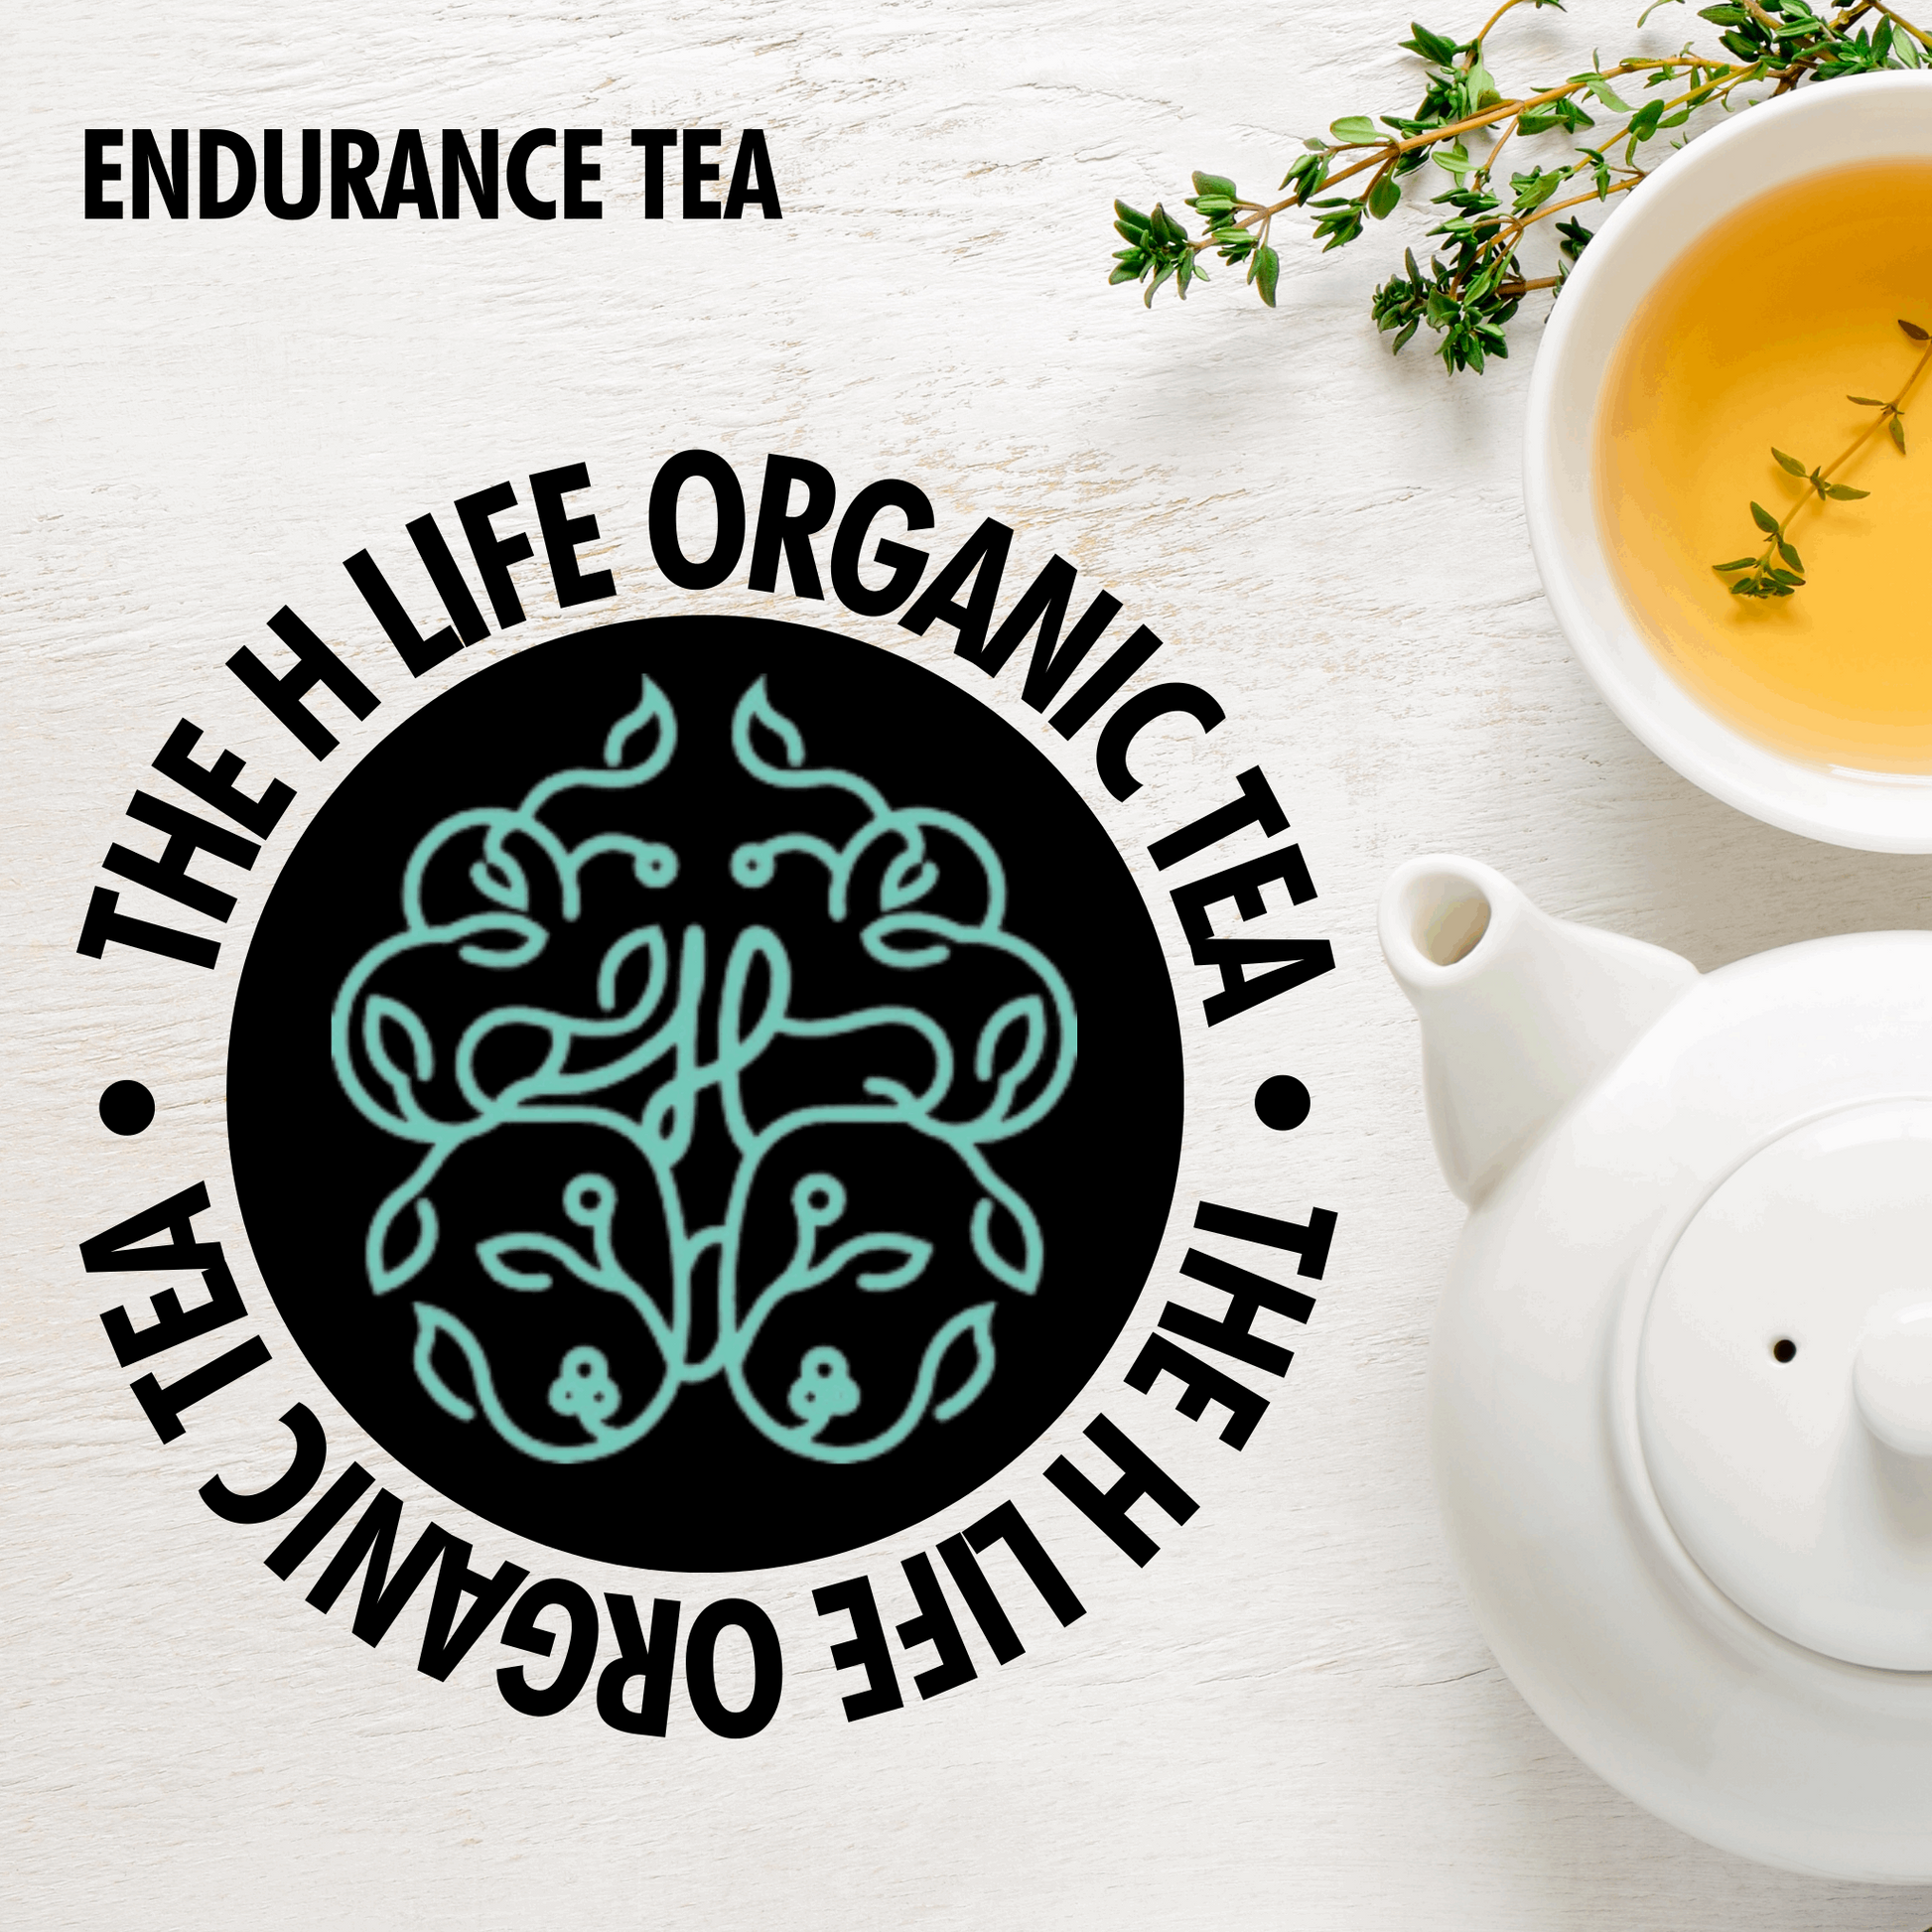 Endurance Tea